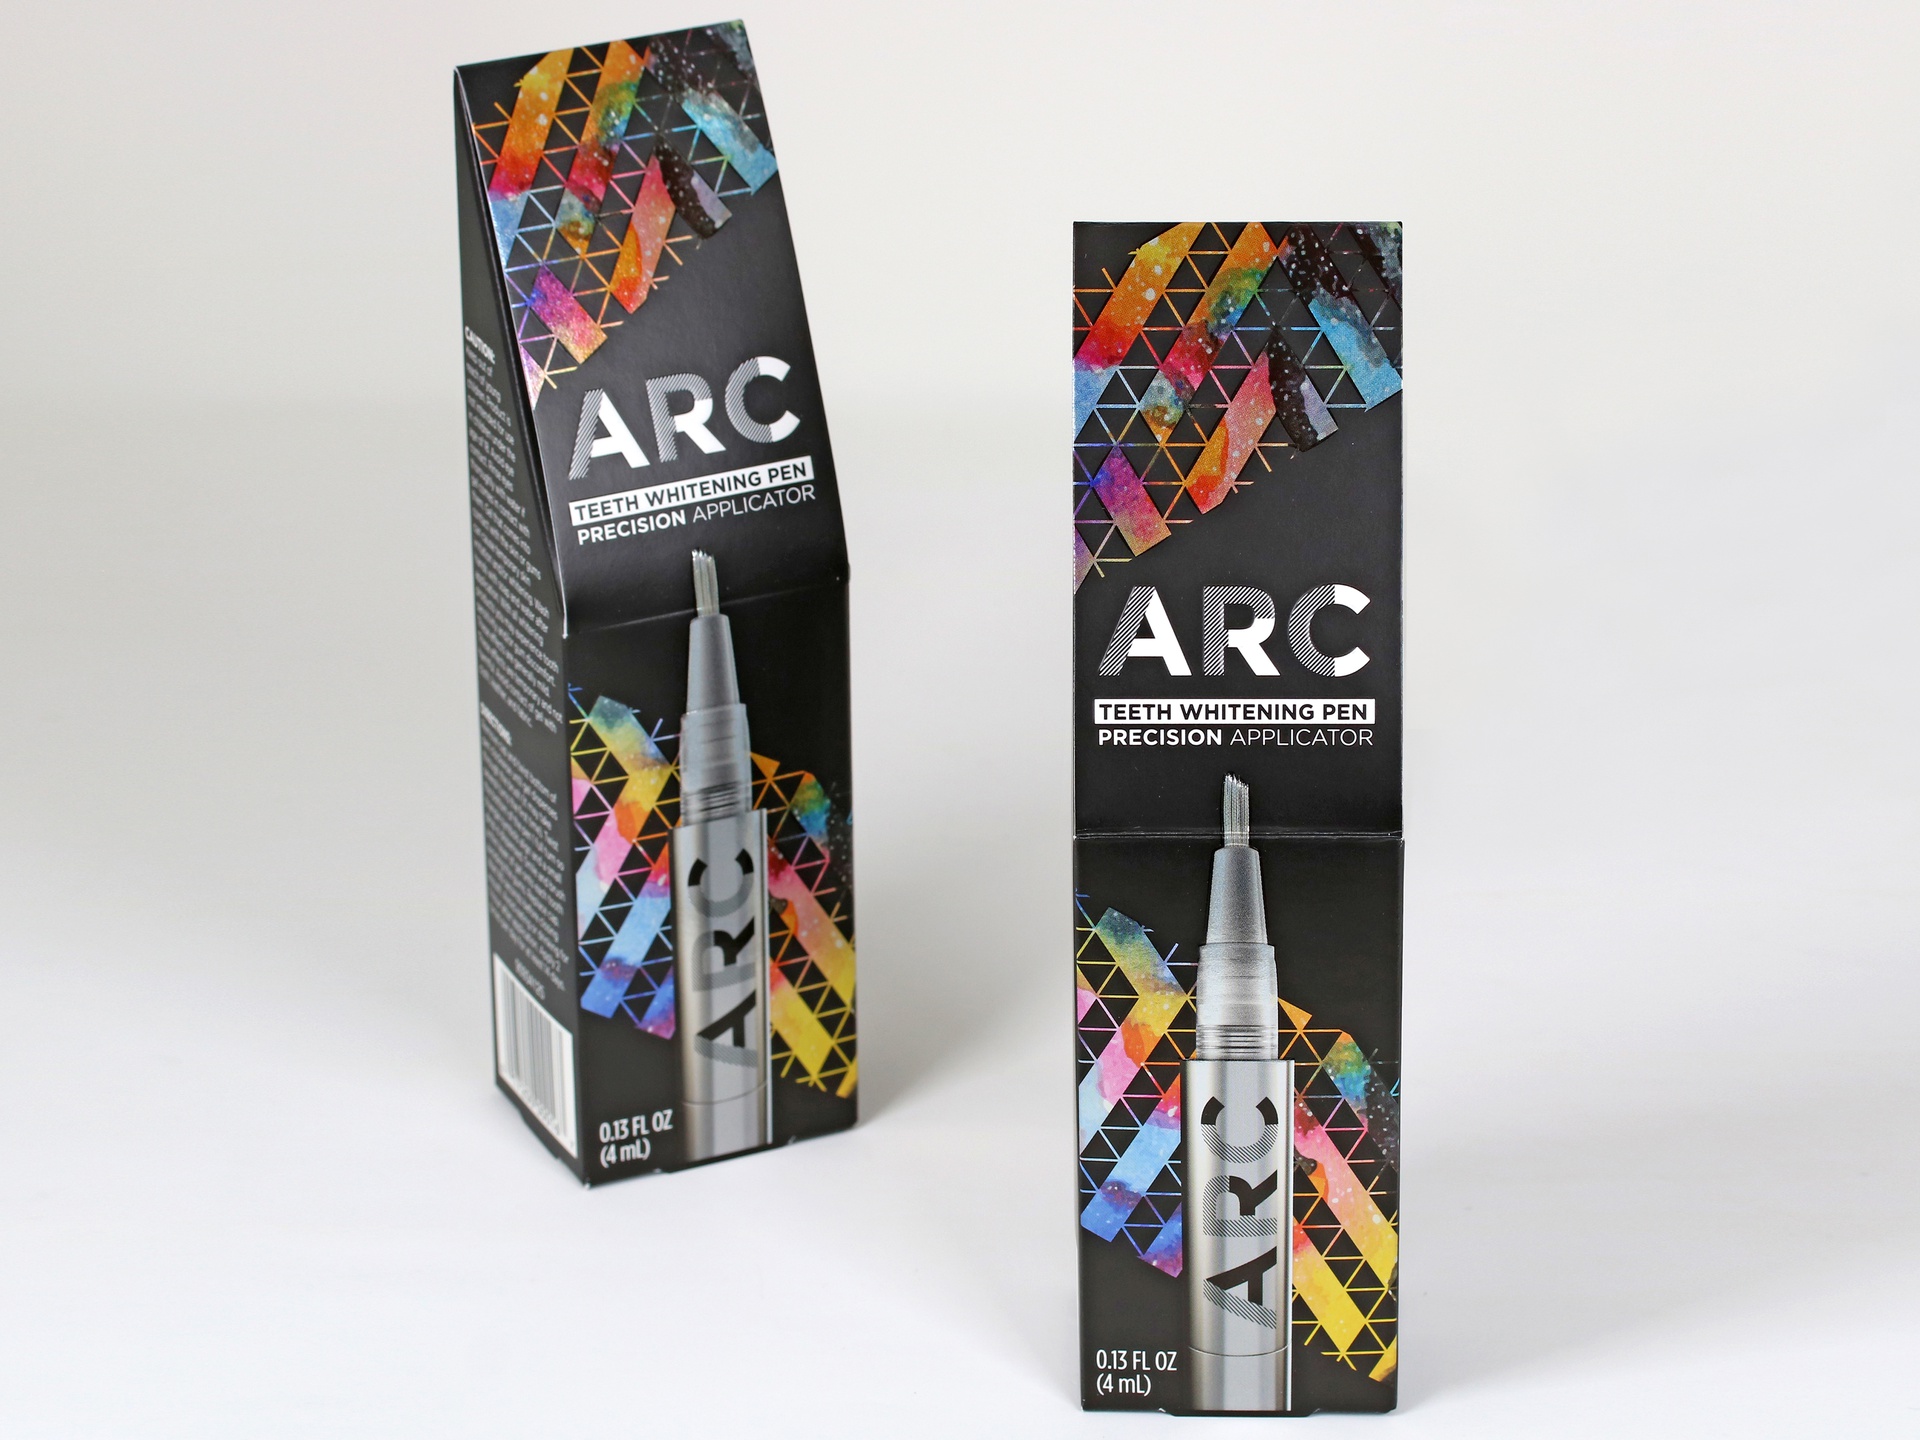 ARC Teeth Whitening Pen packaging